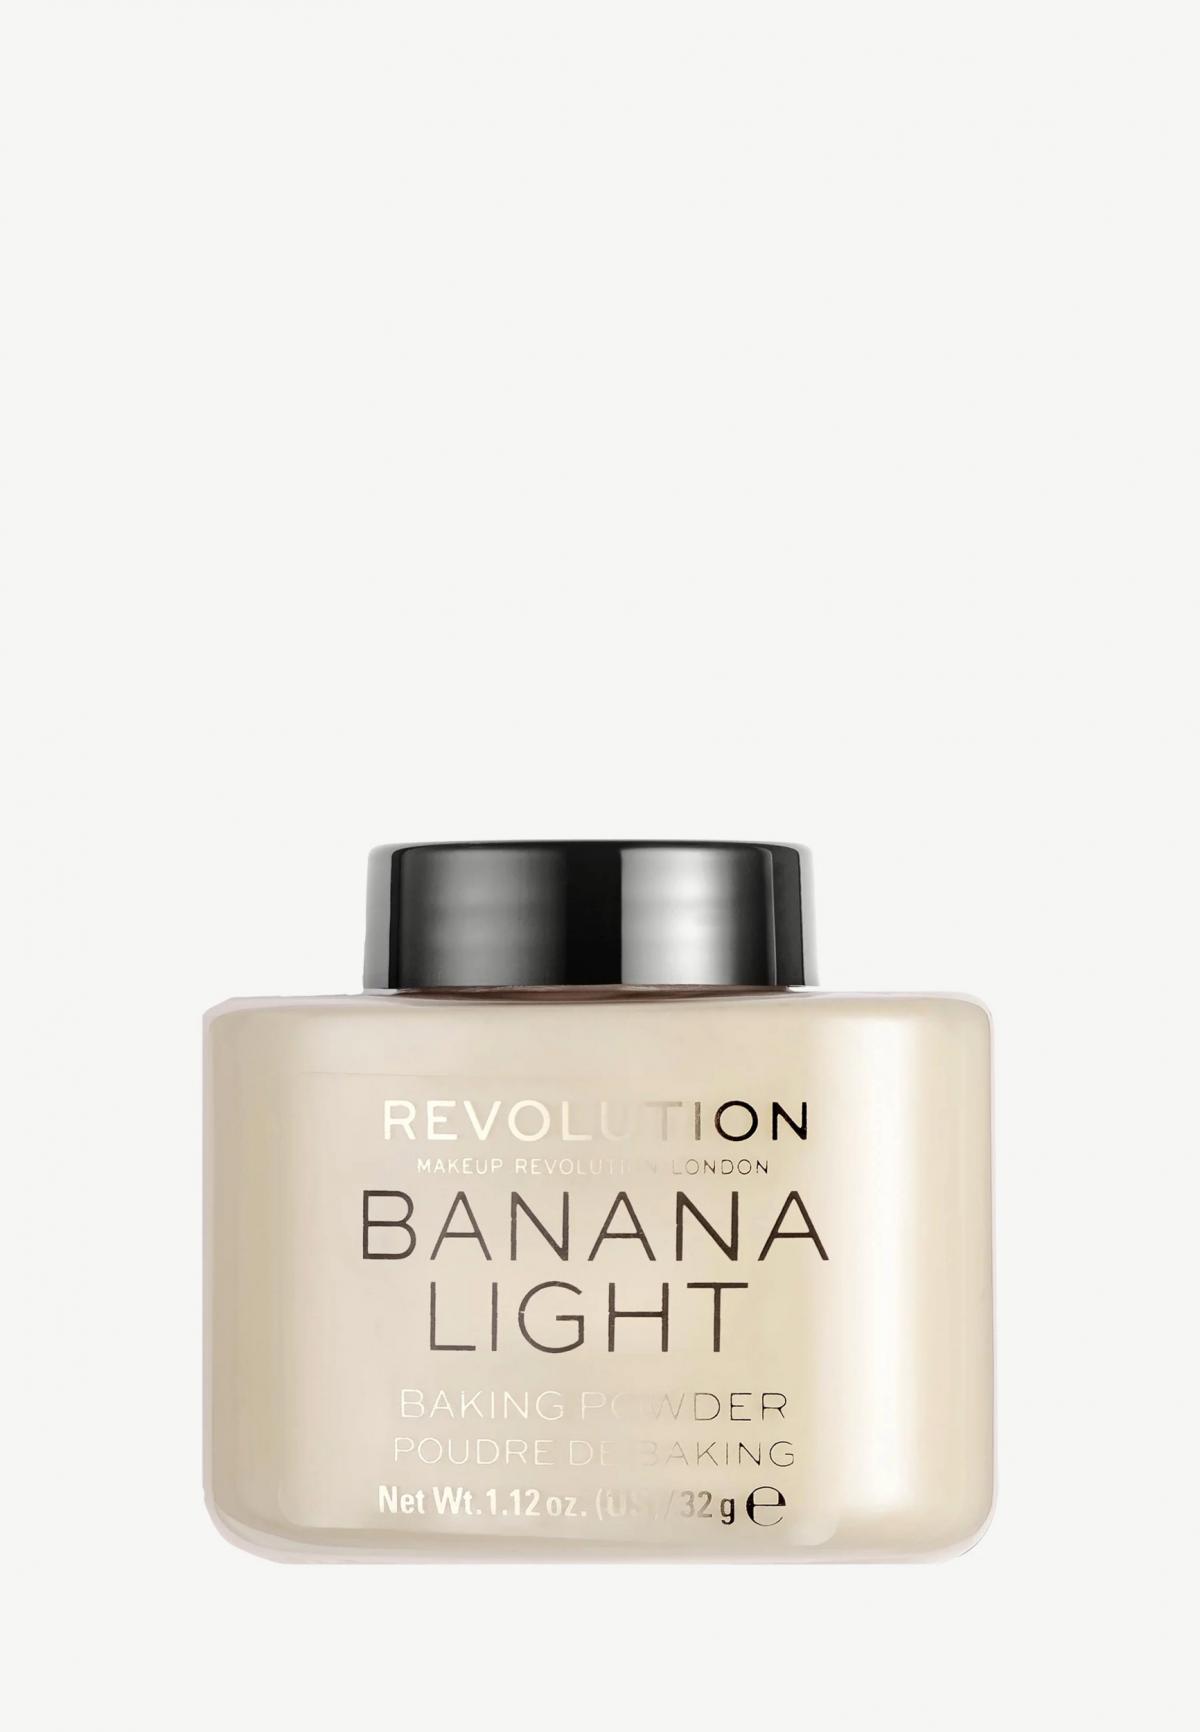 Banana Powder Light